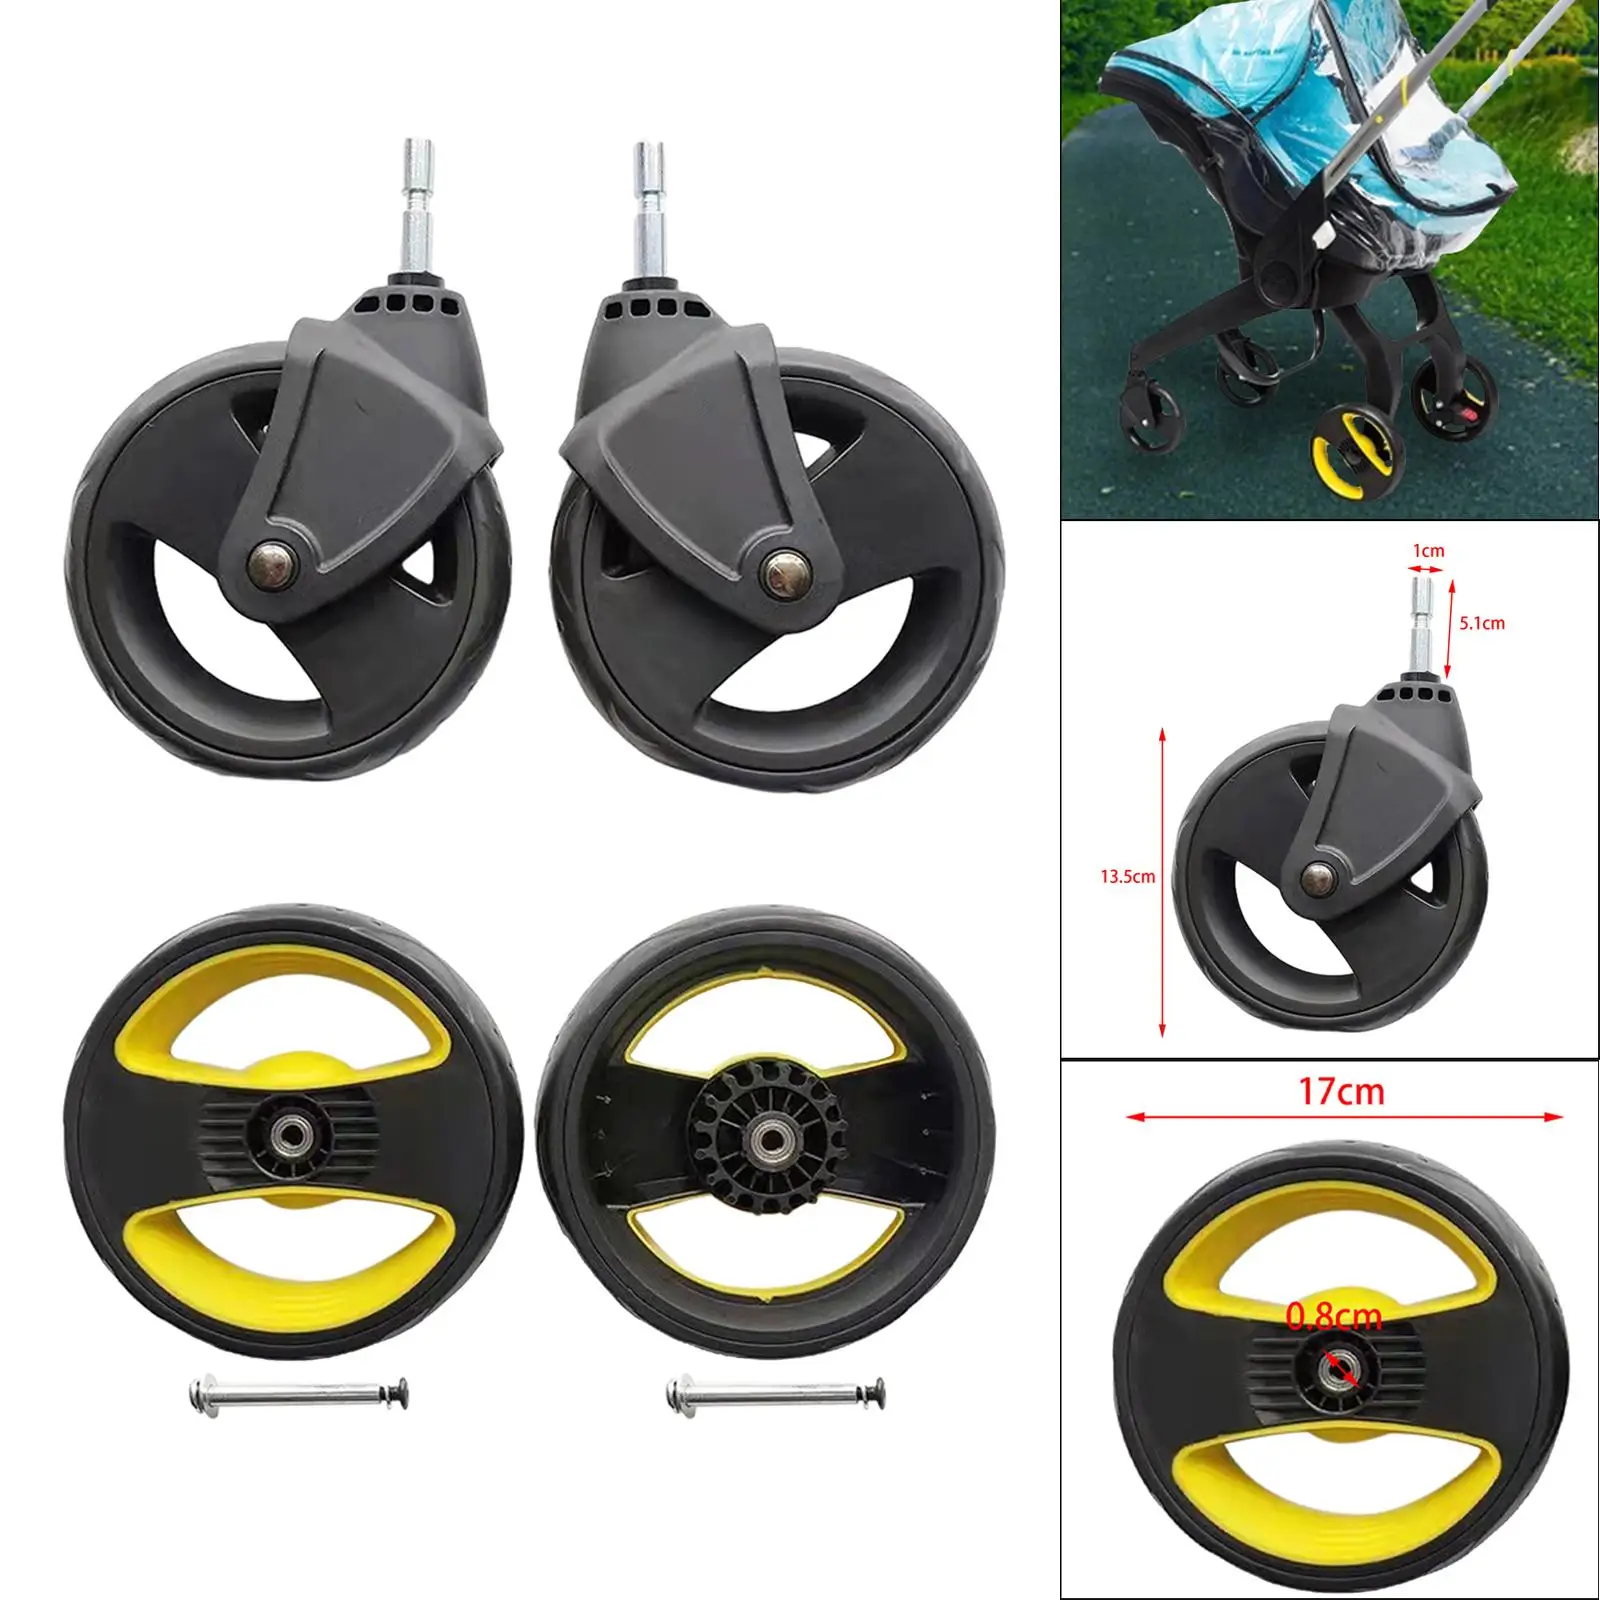 2x Pushchair Spare Parts Accessories Universal Pram Tire Wheel Replacement Swivel Wheel Rubber Trolley Wheel Trolley Wheel Set